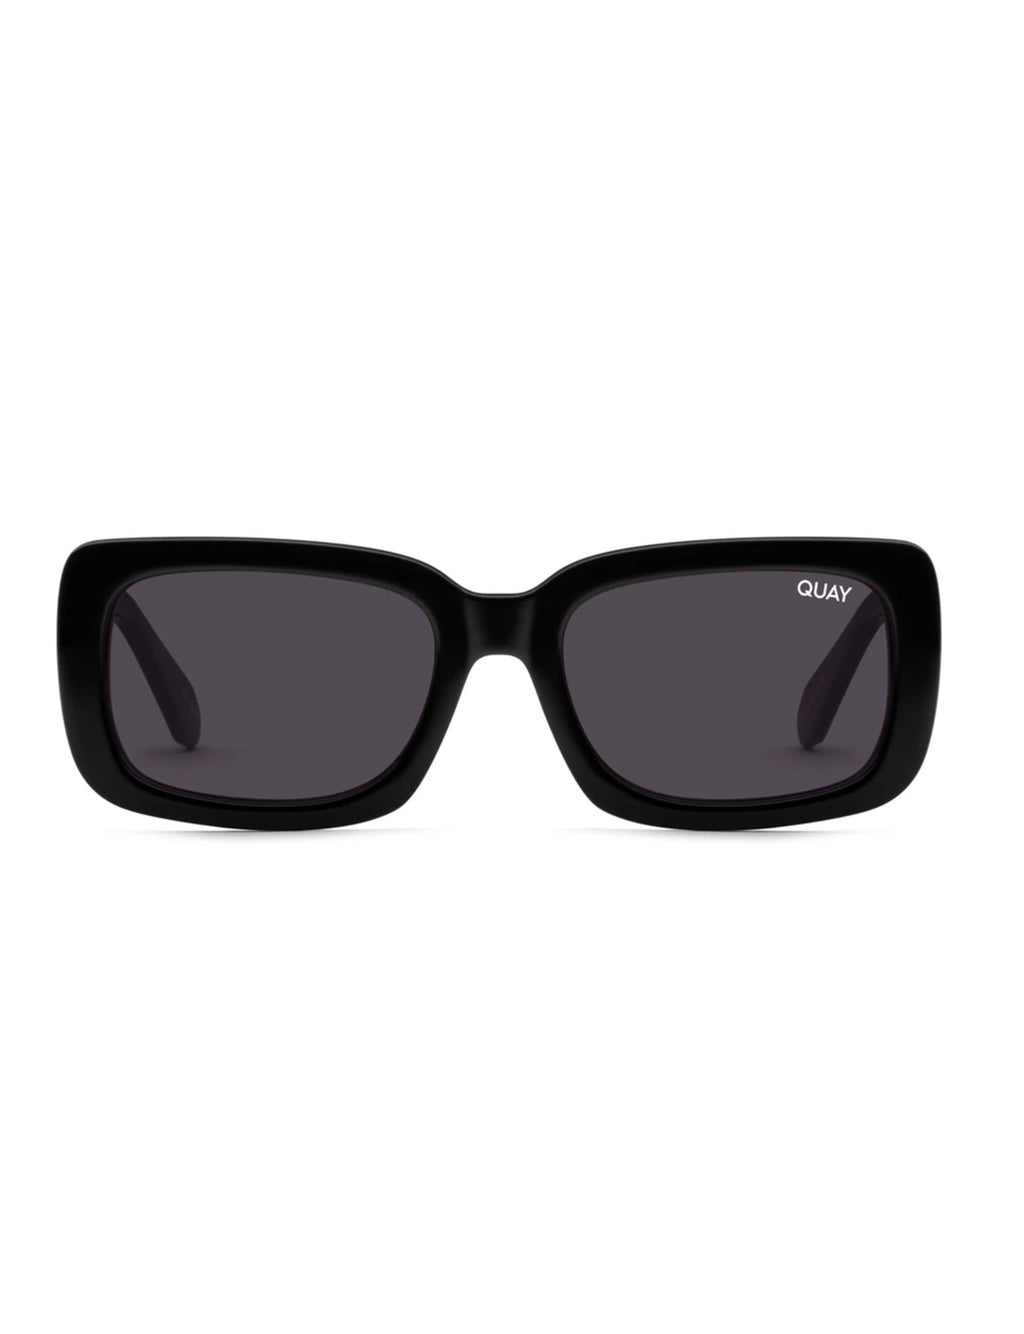 Yada Yada Sunglasses, Black/Black